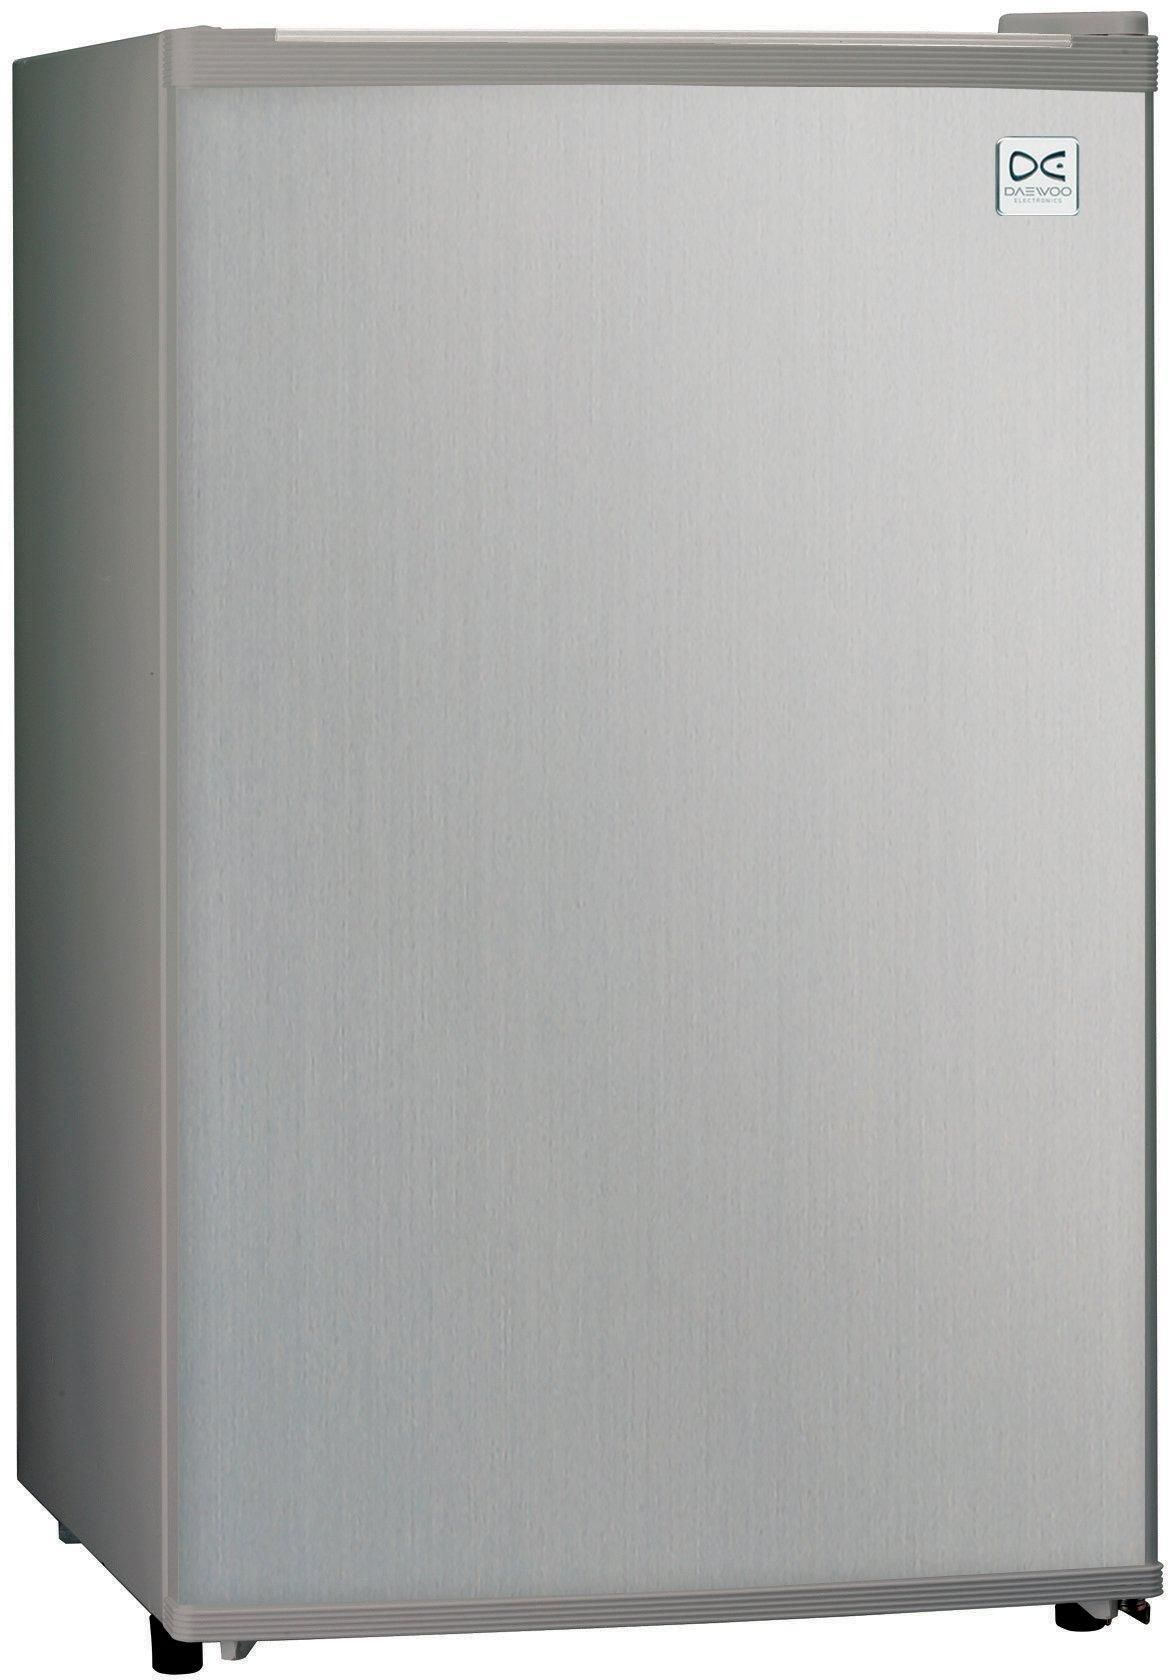 Daewoo Compact Refrigerator 2.7Cu.Ft,2L Bottle Rack, Silver